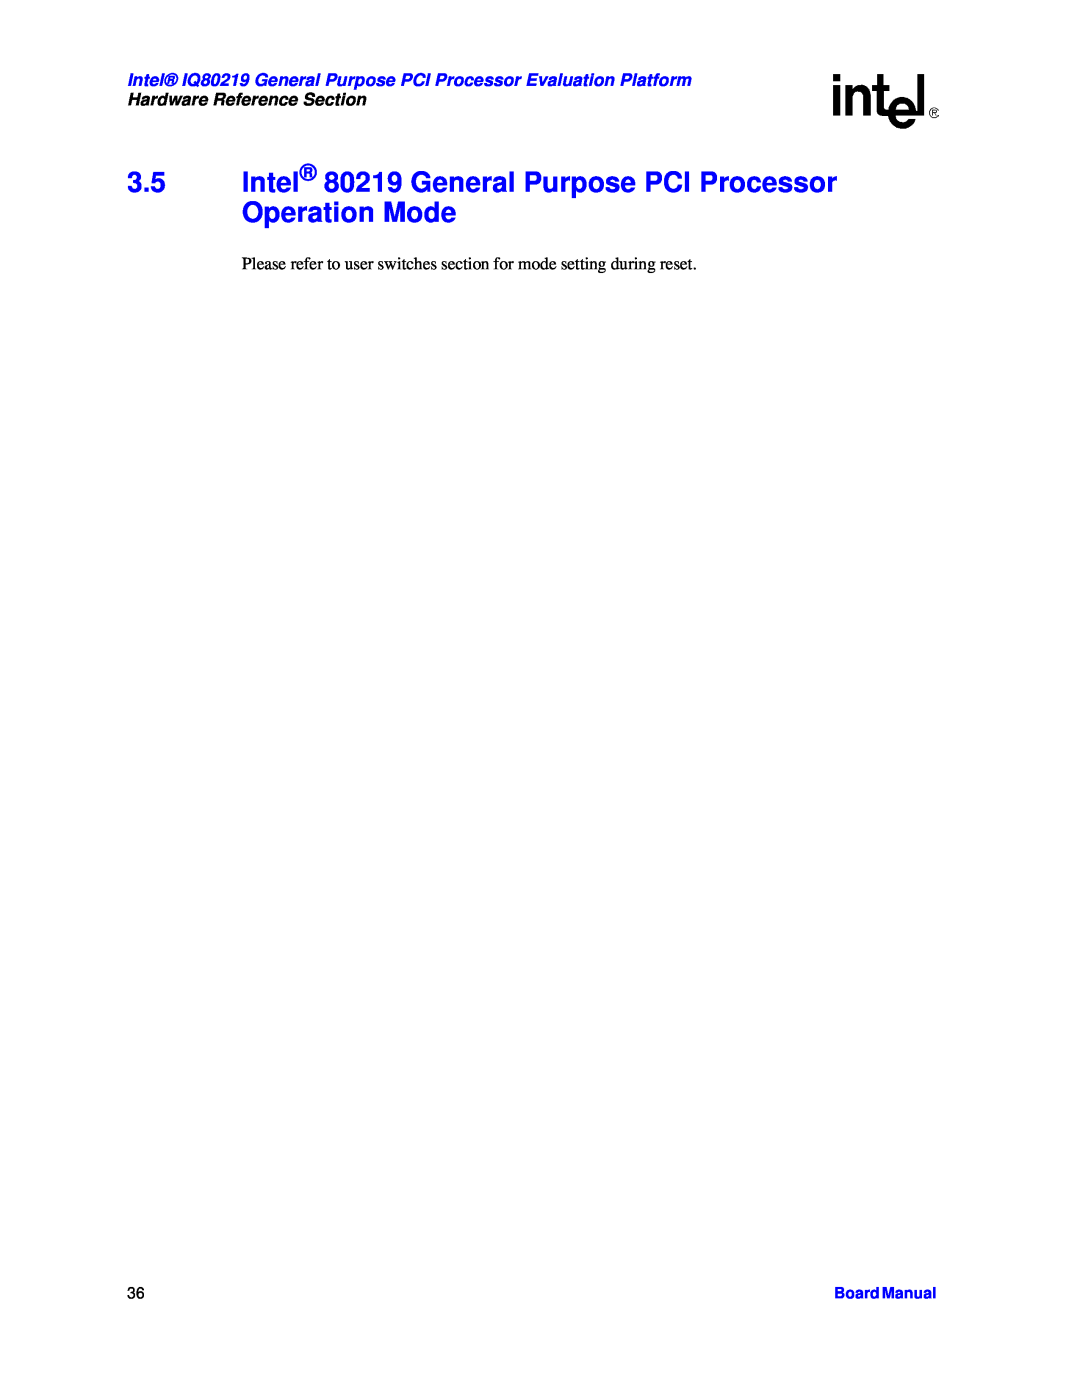 Intel IQ80219 manual Intel 80219 General Purpose PCI Processor Operation Mode, Board Manual 